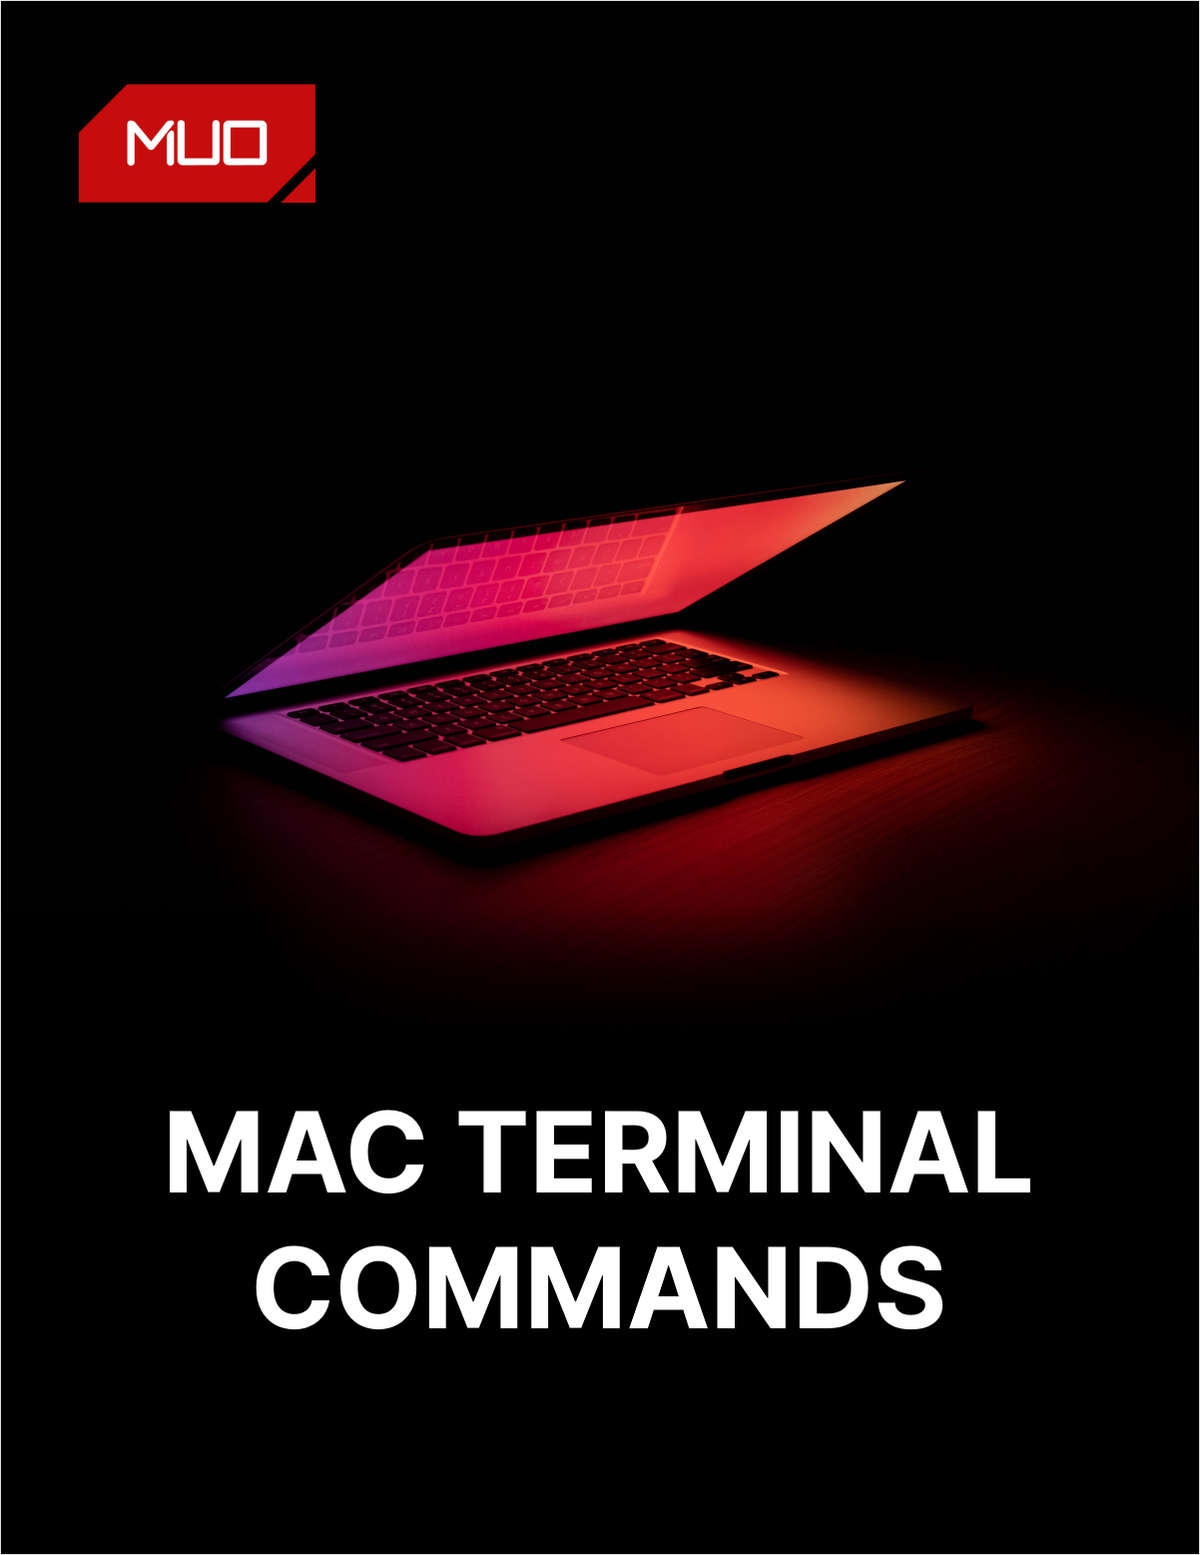 Mac Terminal Commands Cheat Sheet